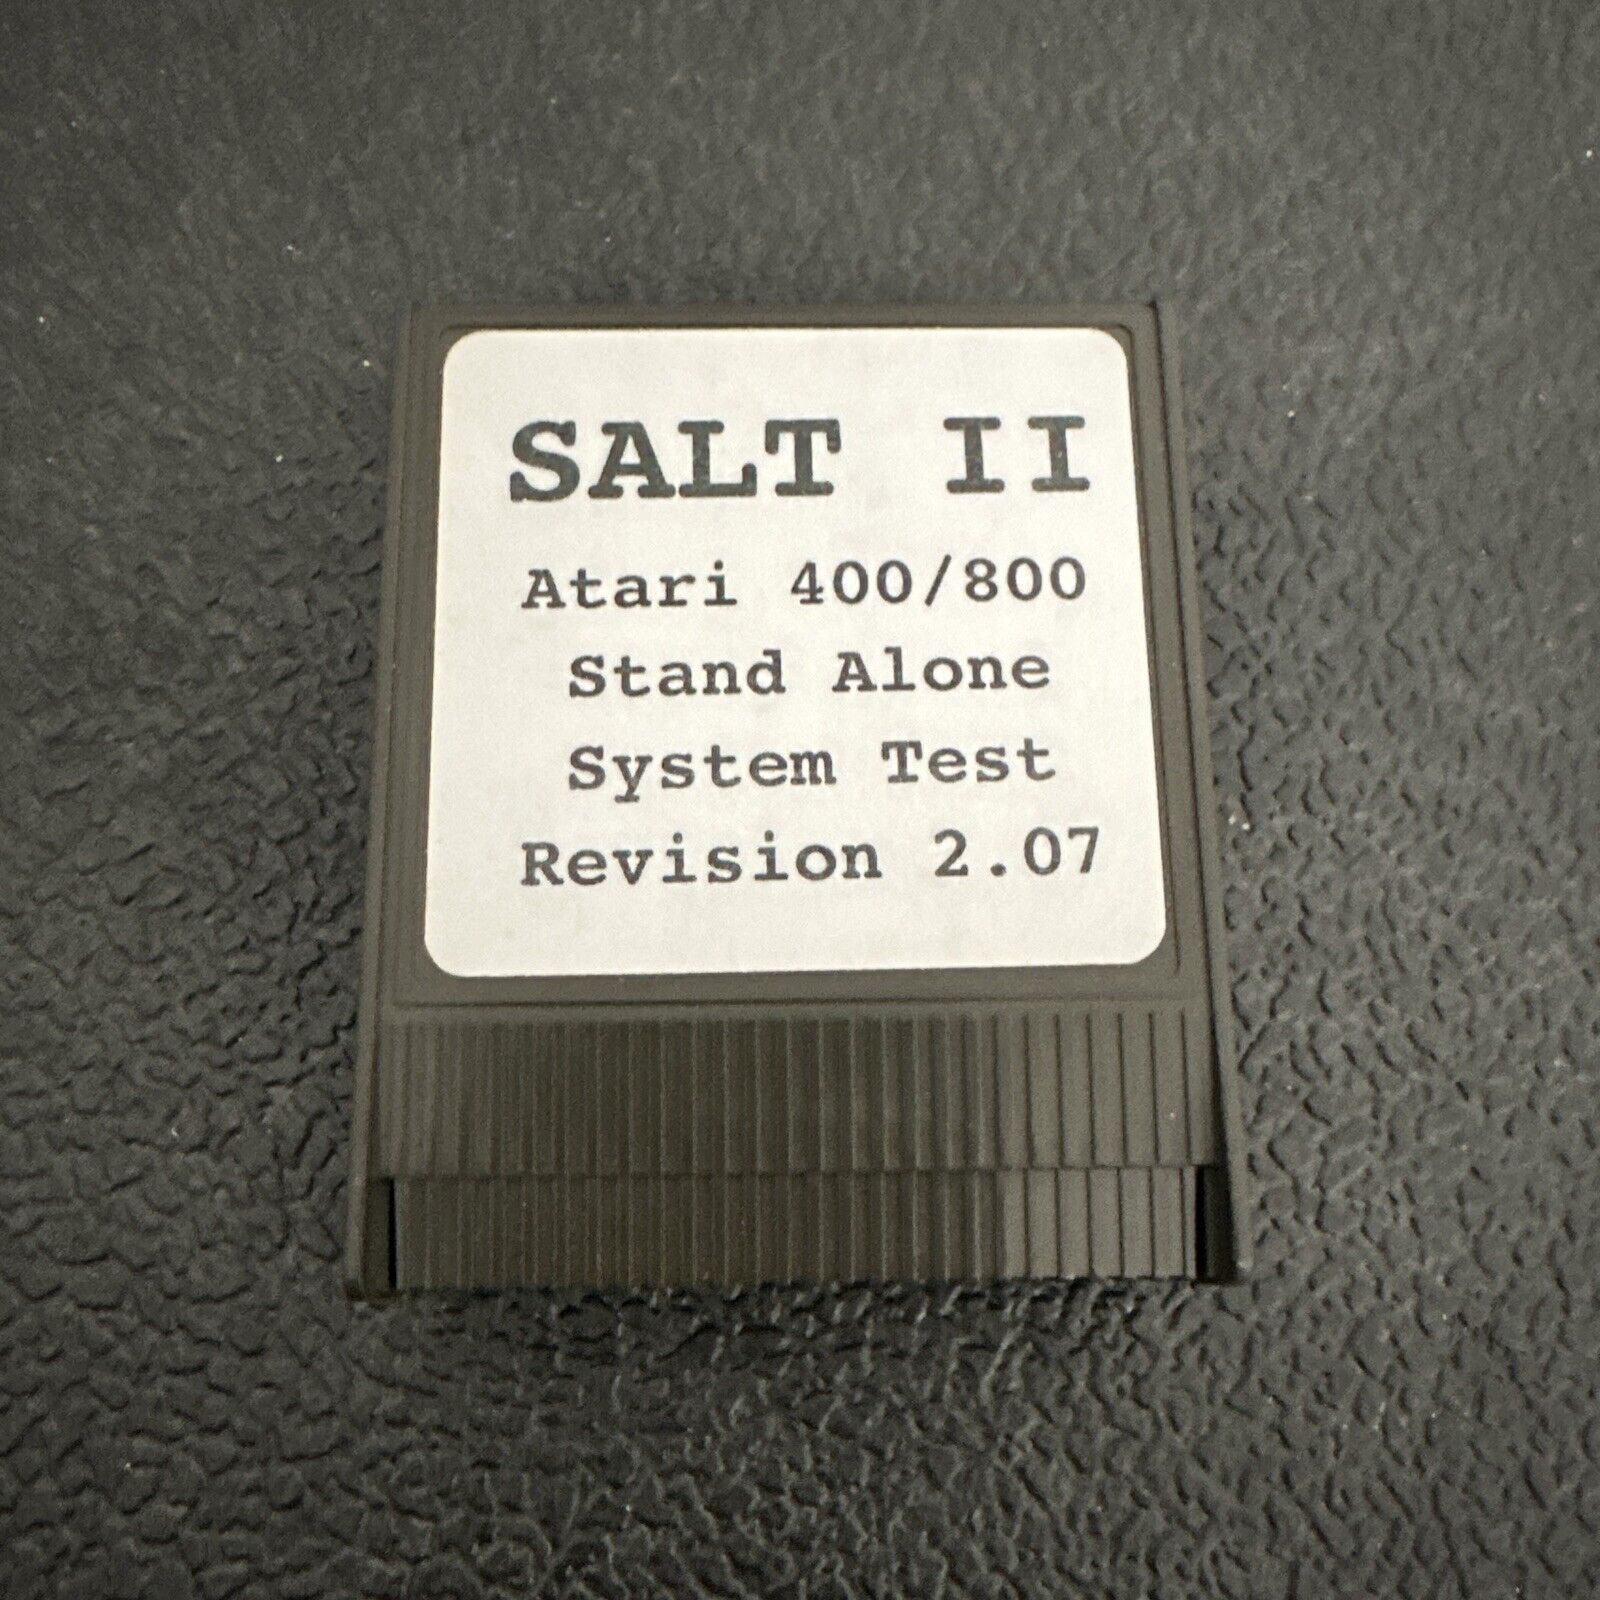 SALT II Atari 400 / 800 System Stand Alone Test Revision 2.07